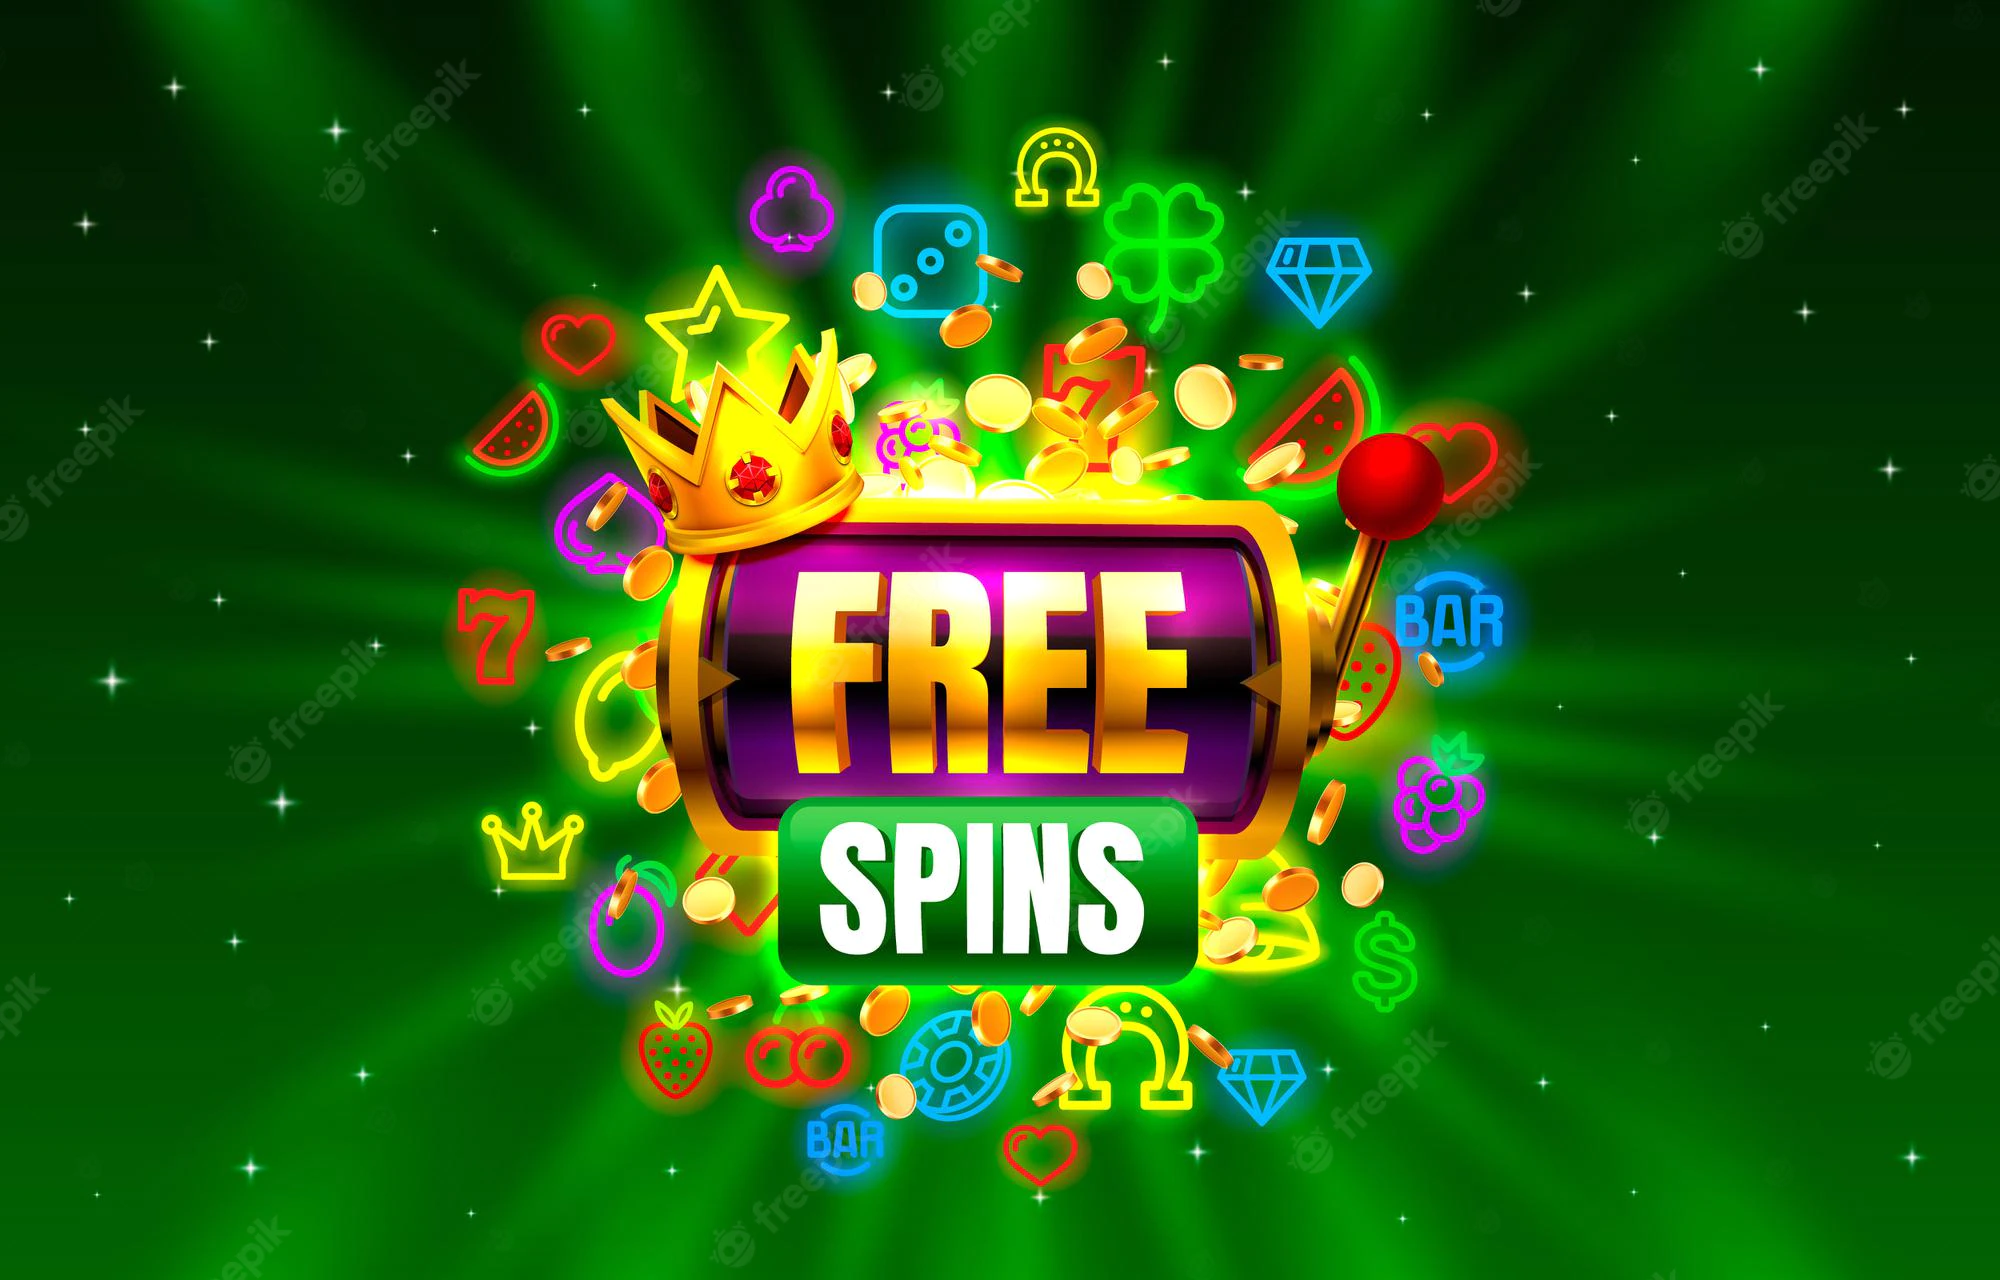 Casino Free Spins